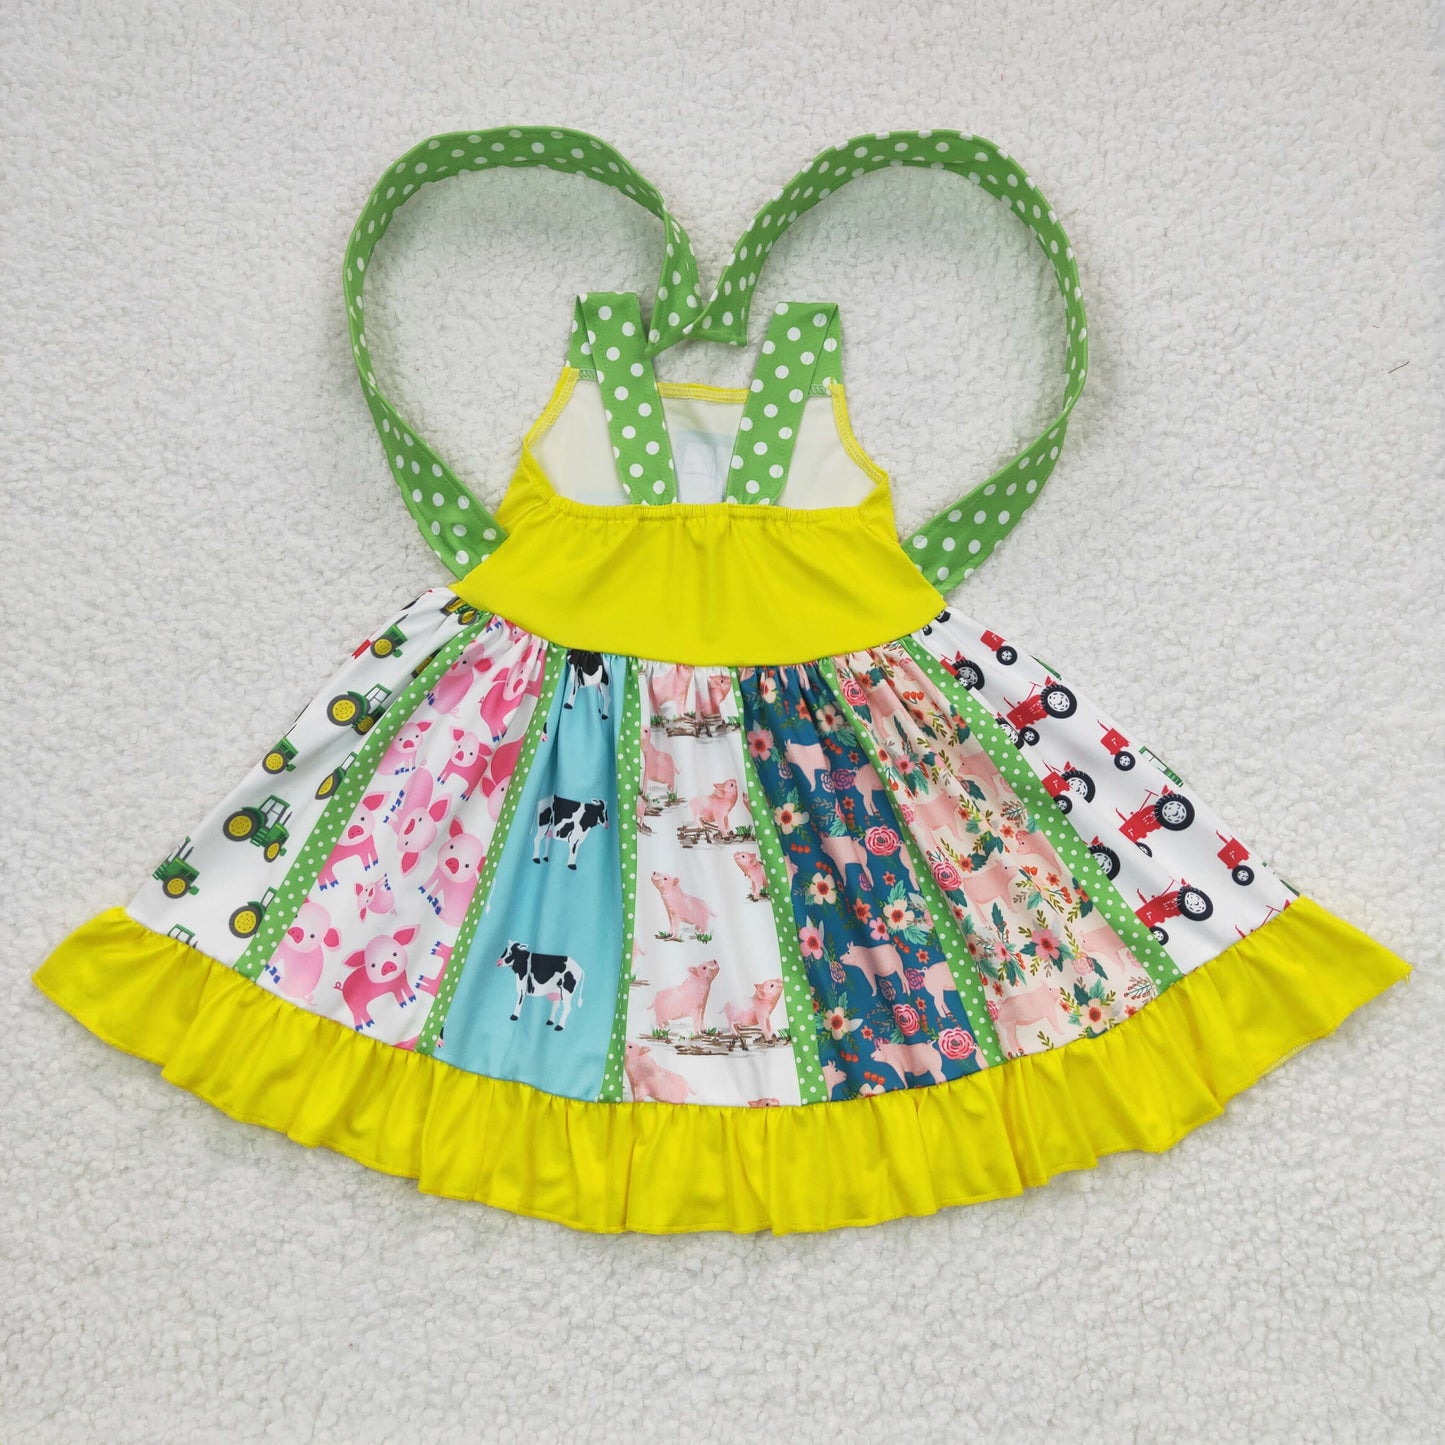 Baby girls farm tractor twirl dress